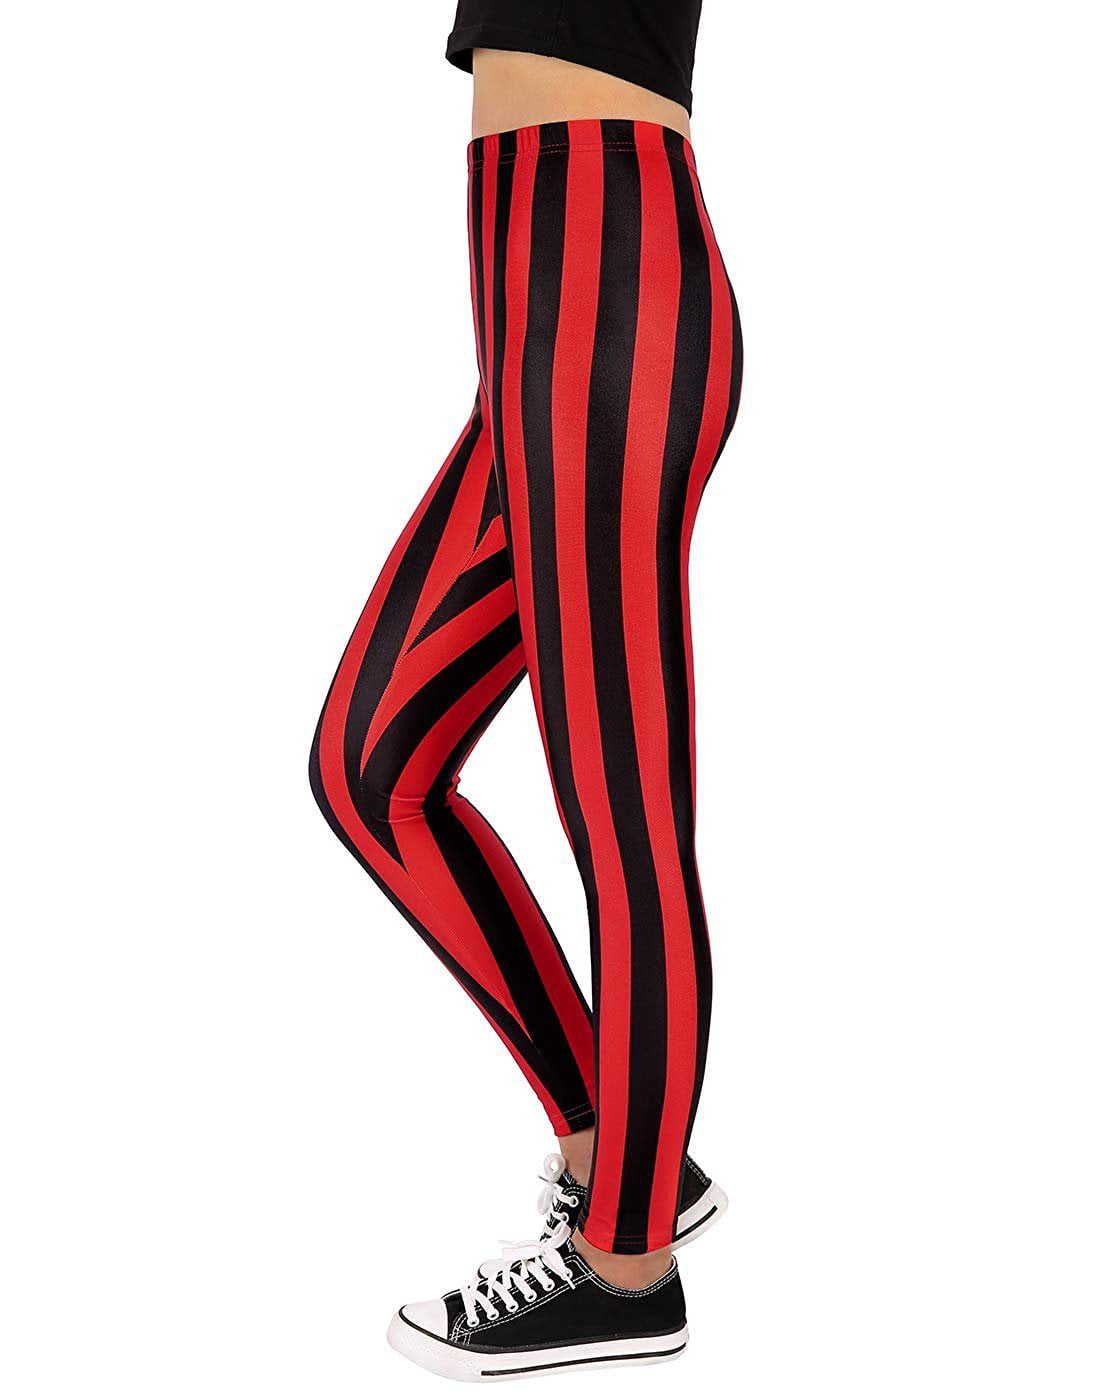 Women/'s Black leggins with red strip detail Sizes Small-XL